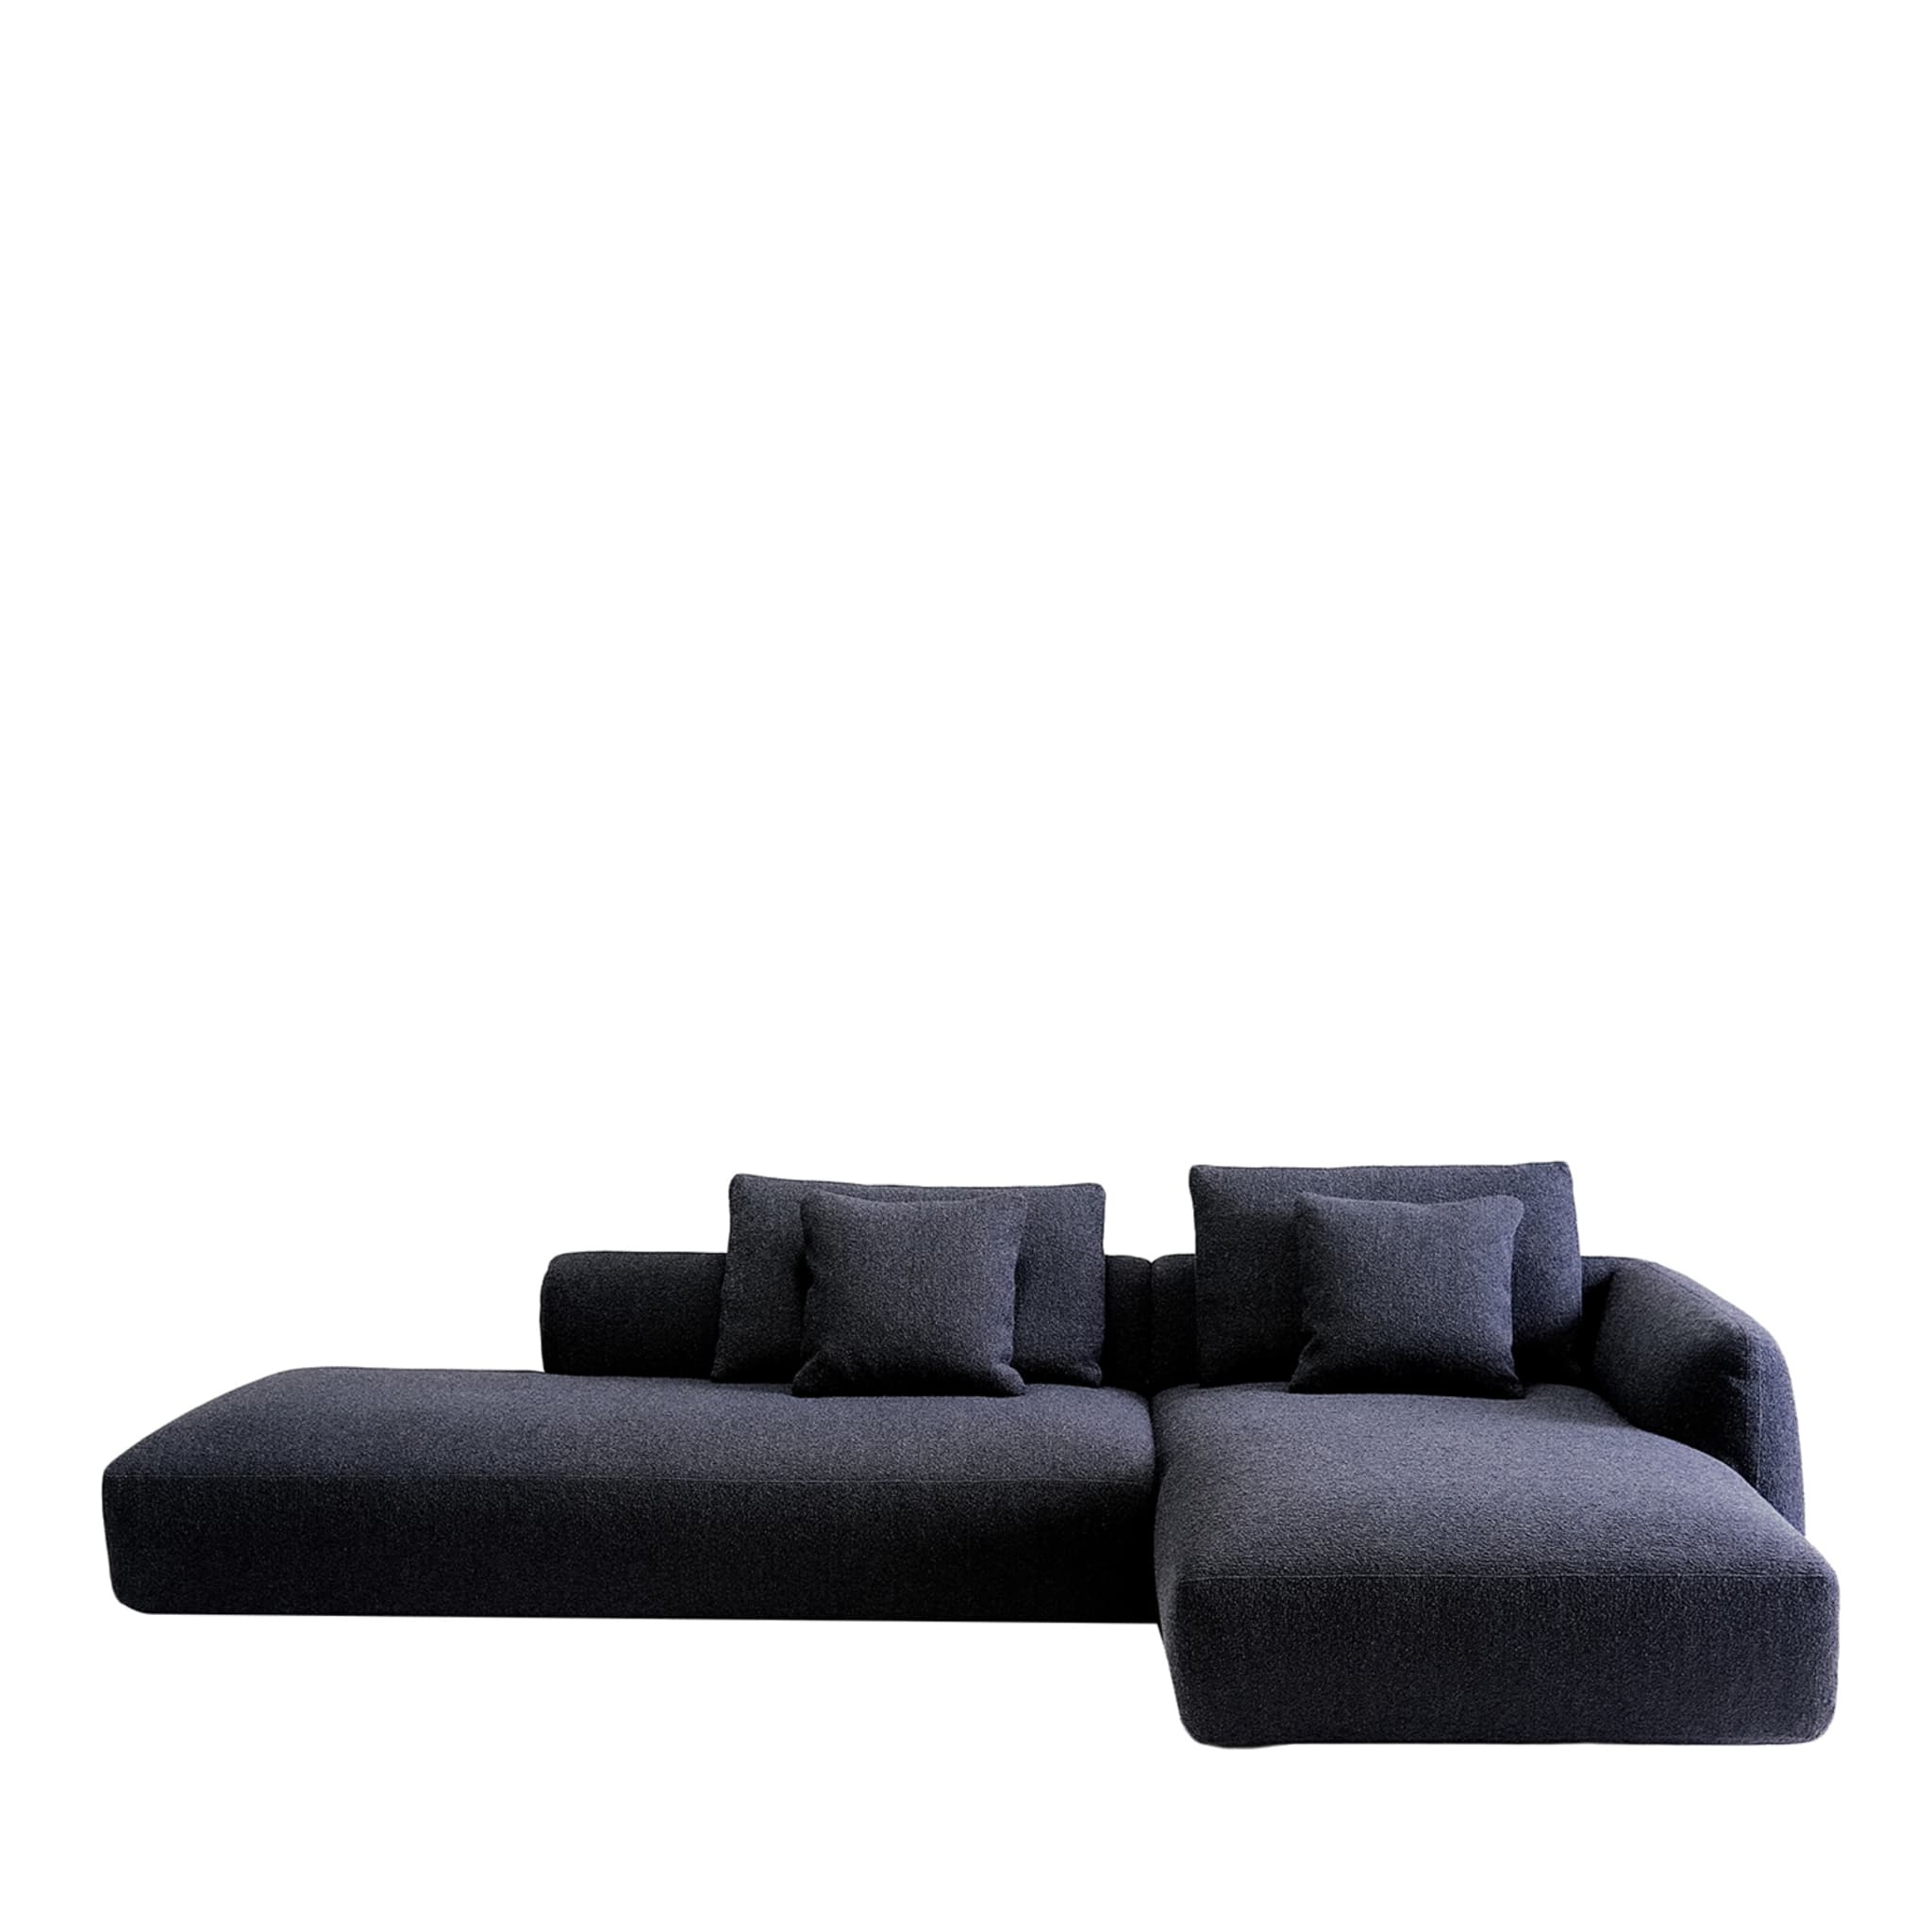 Naxos L-förmiges modulares blaues sofa von Ludovica + Roberto Palomba - Hauptansicht